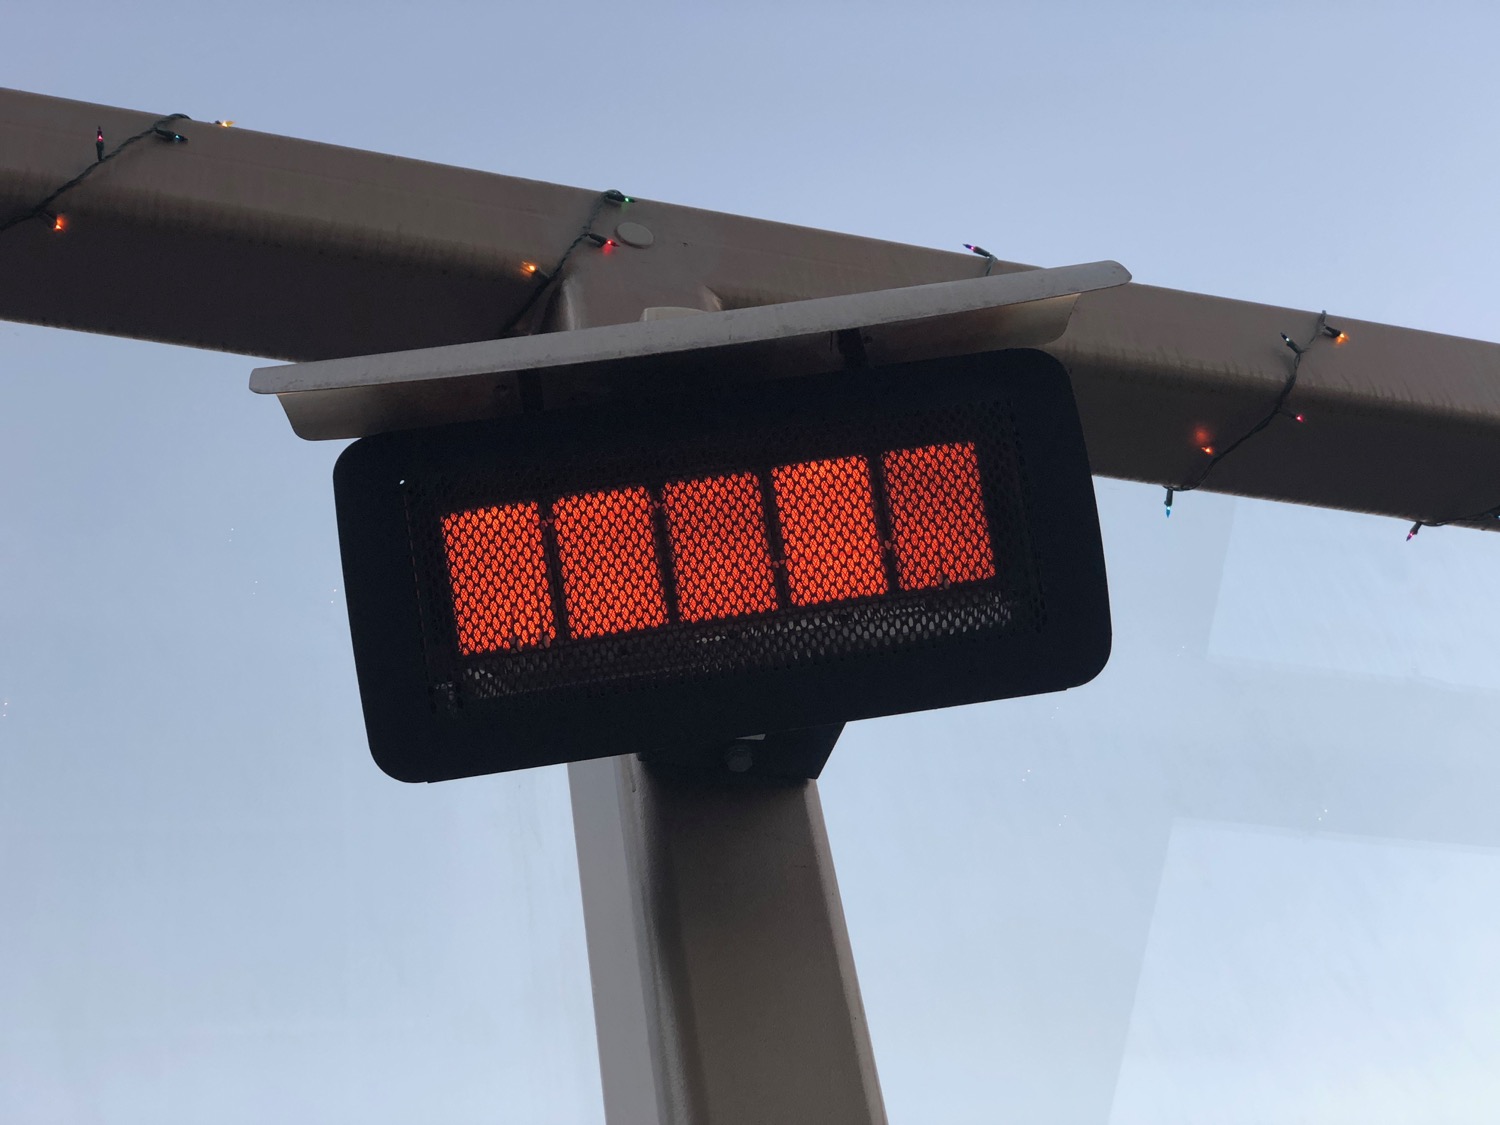 a close up of a traffic light